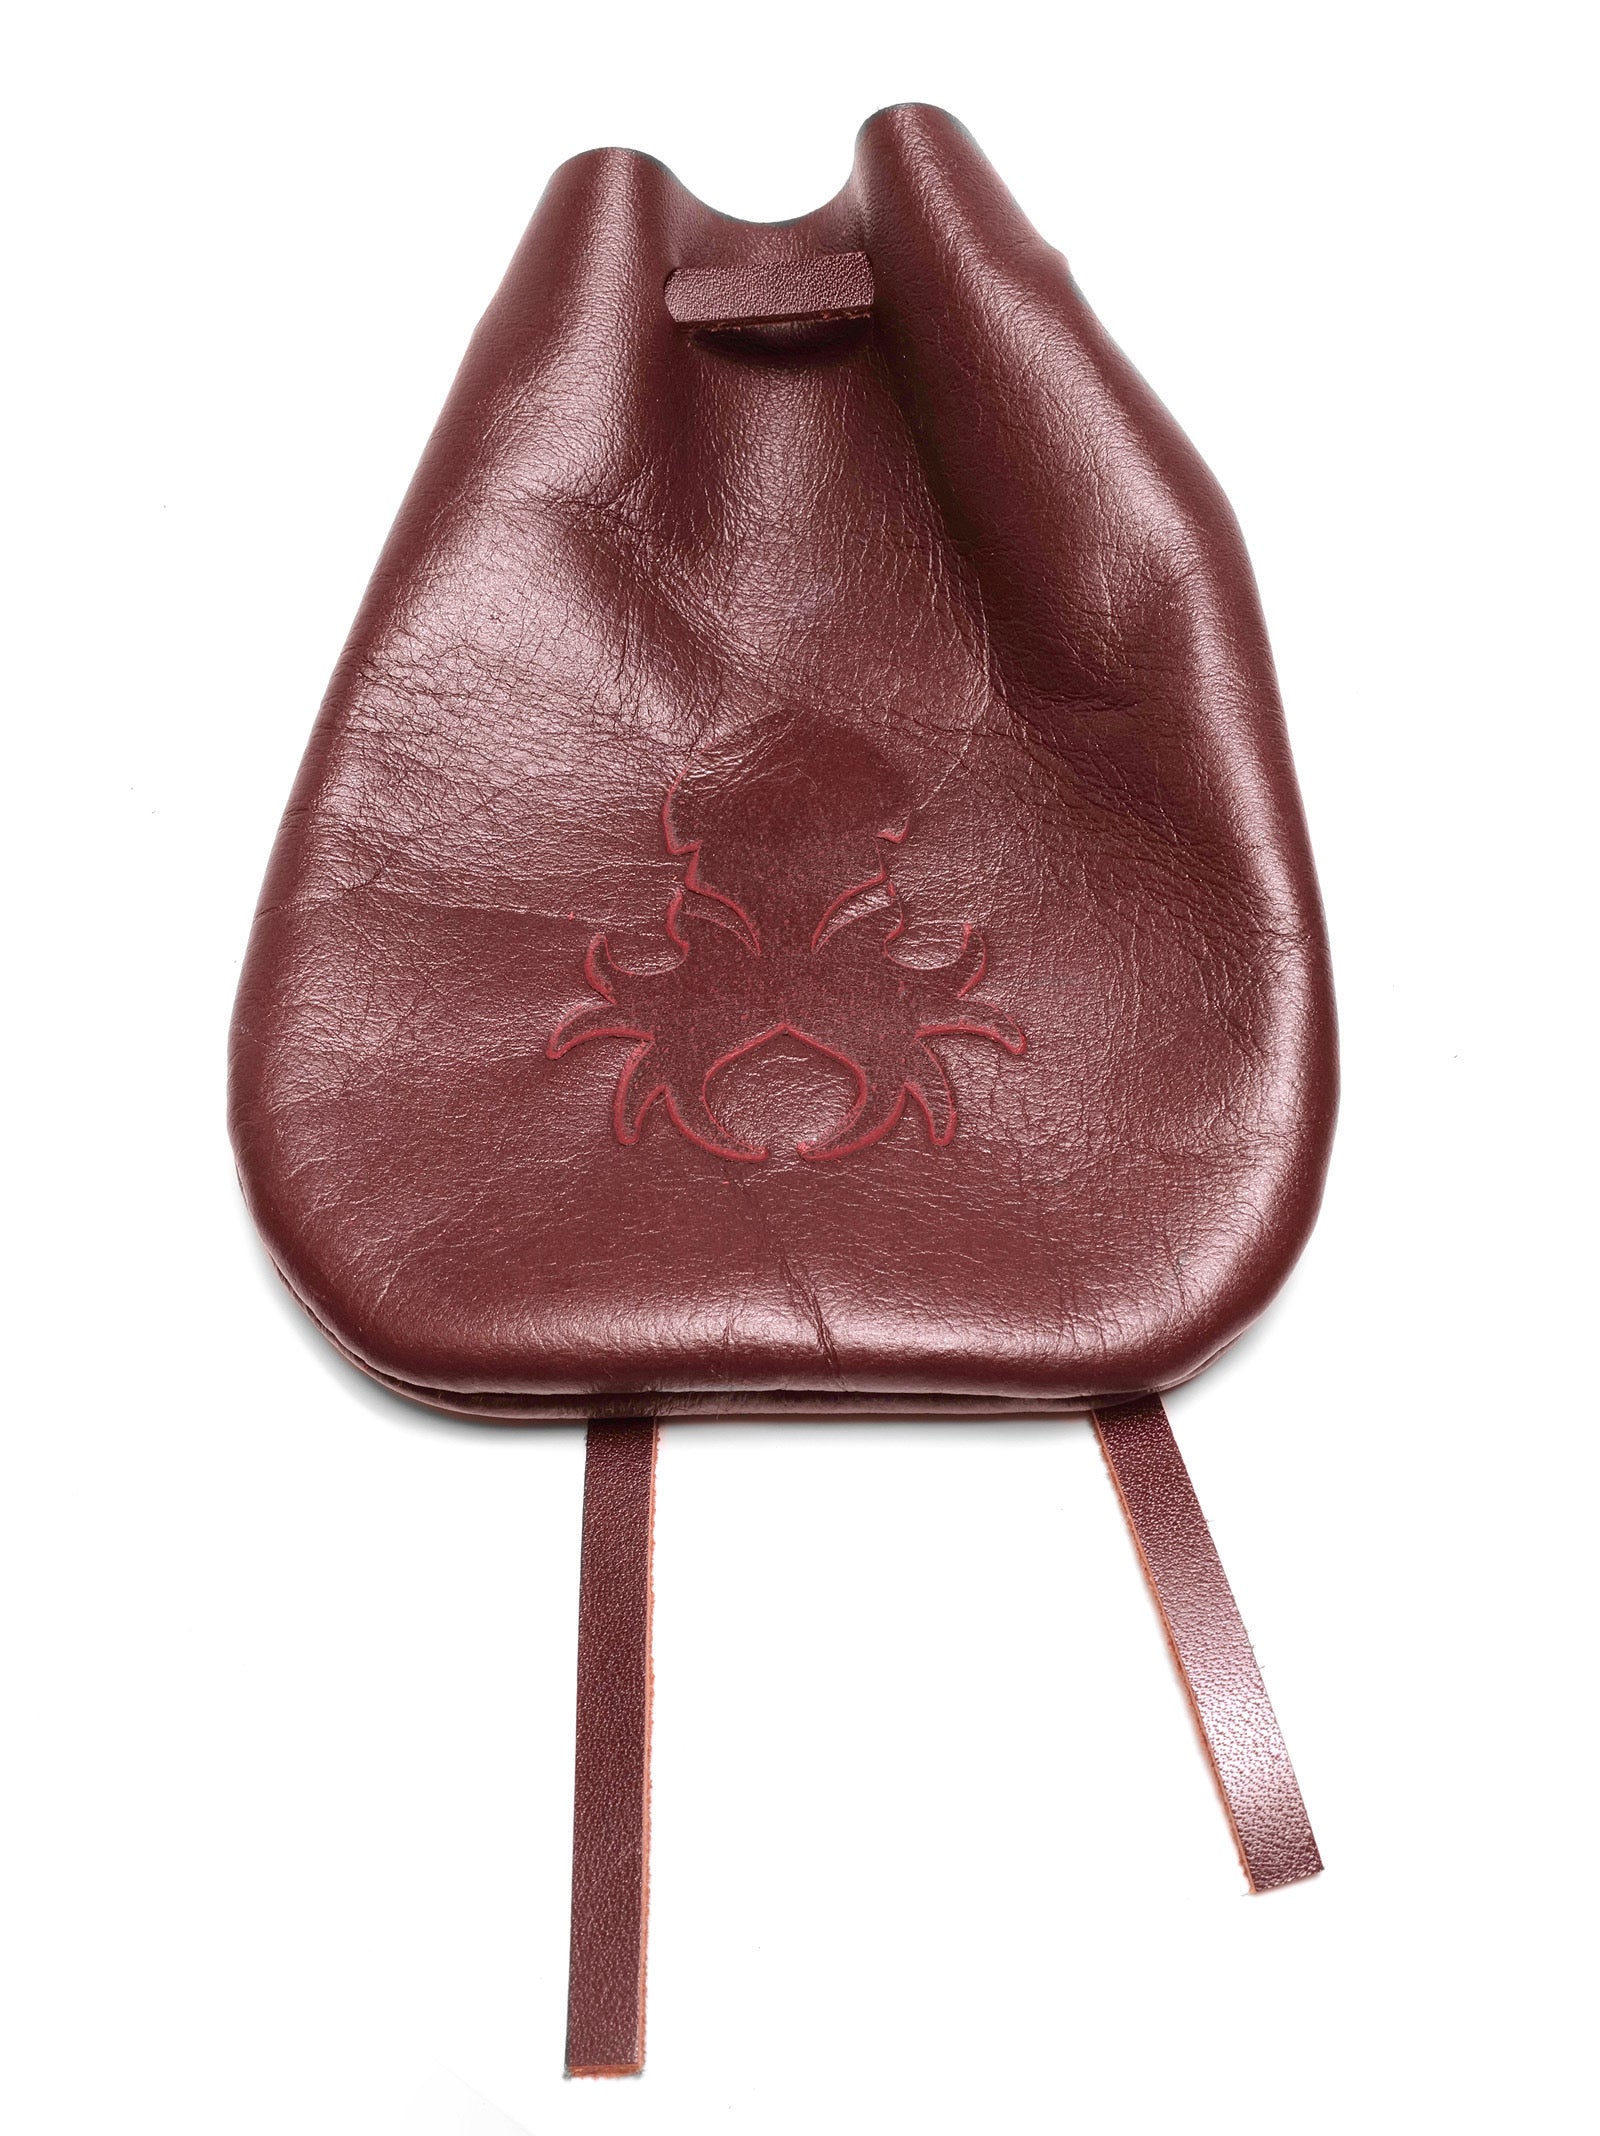 Medium Mahogany Leather Dice Bag